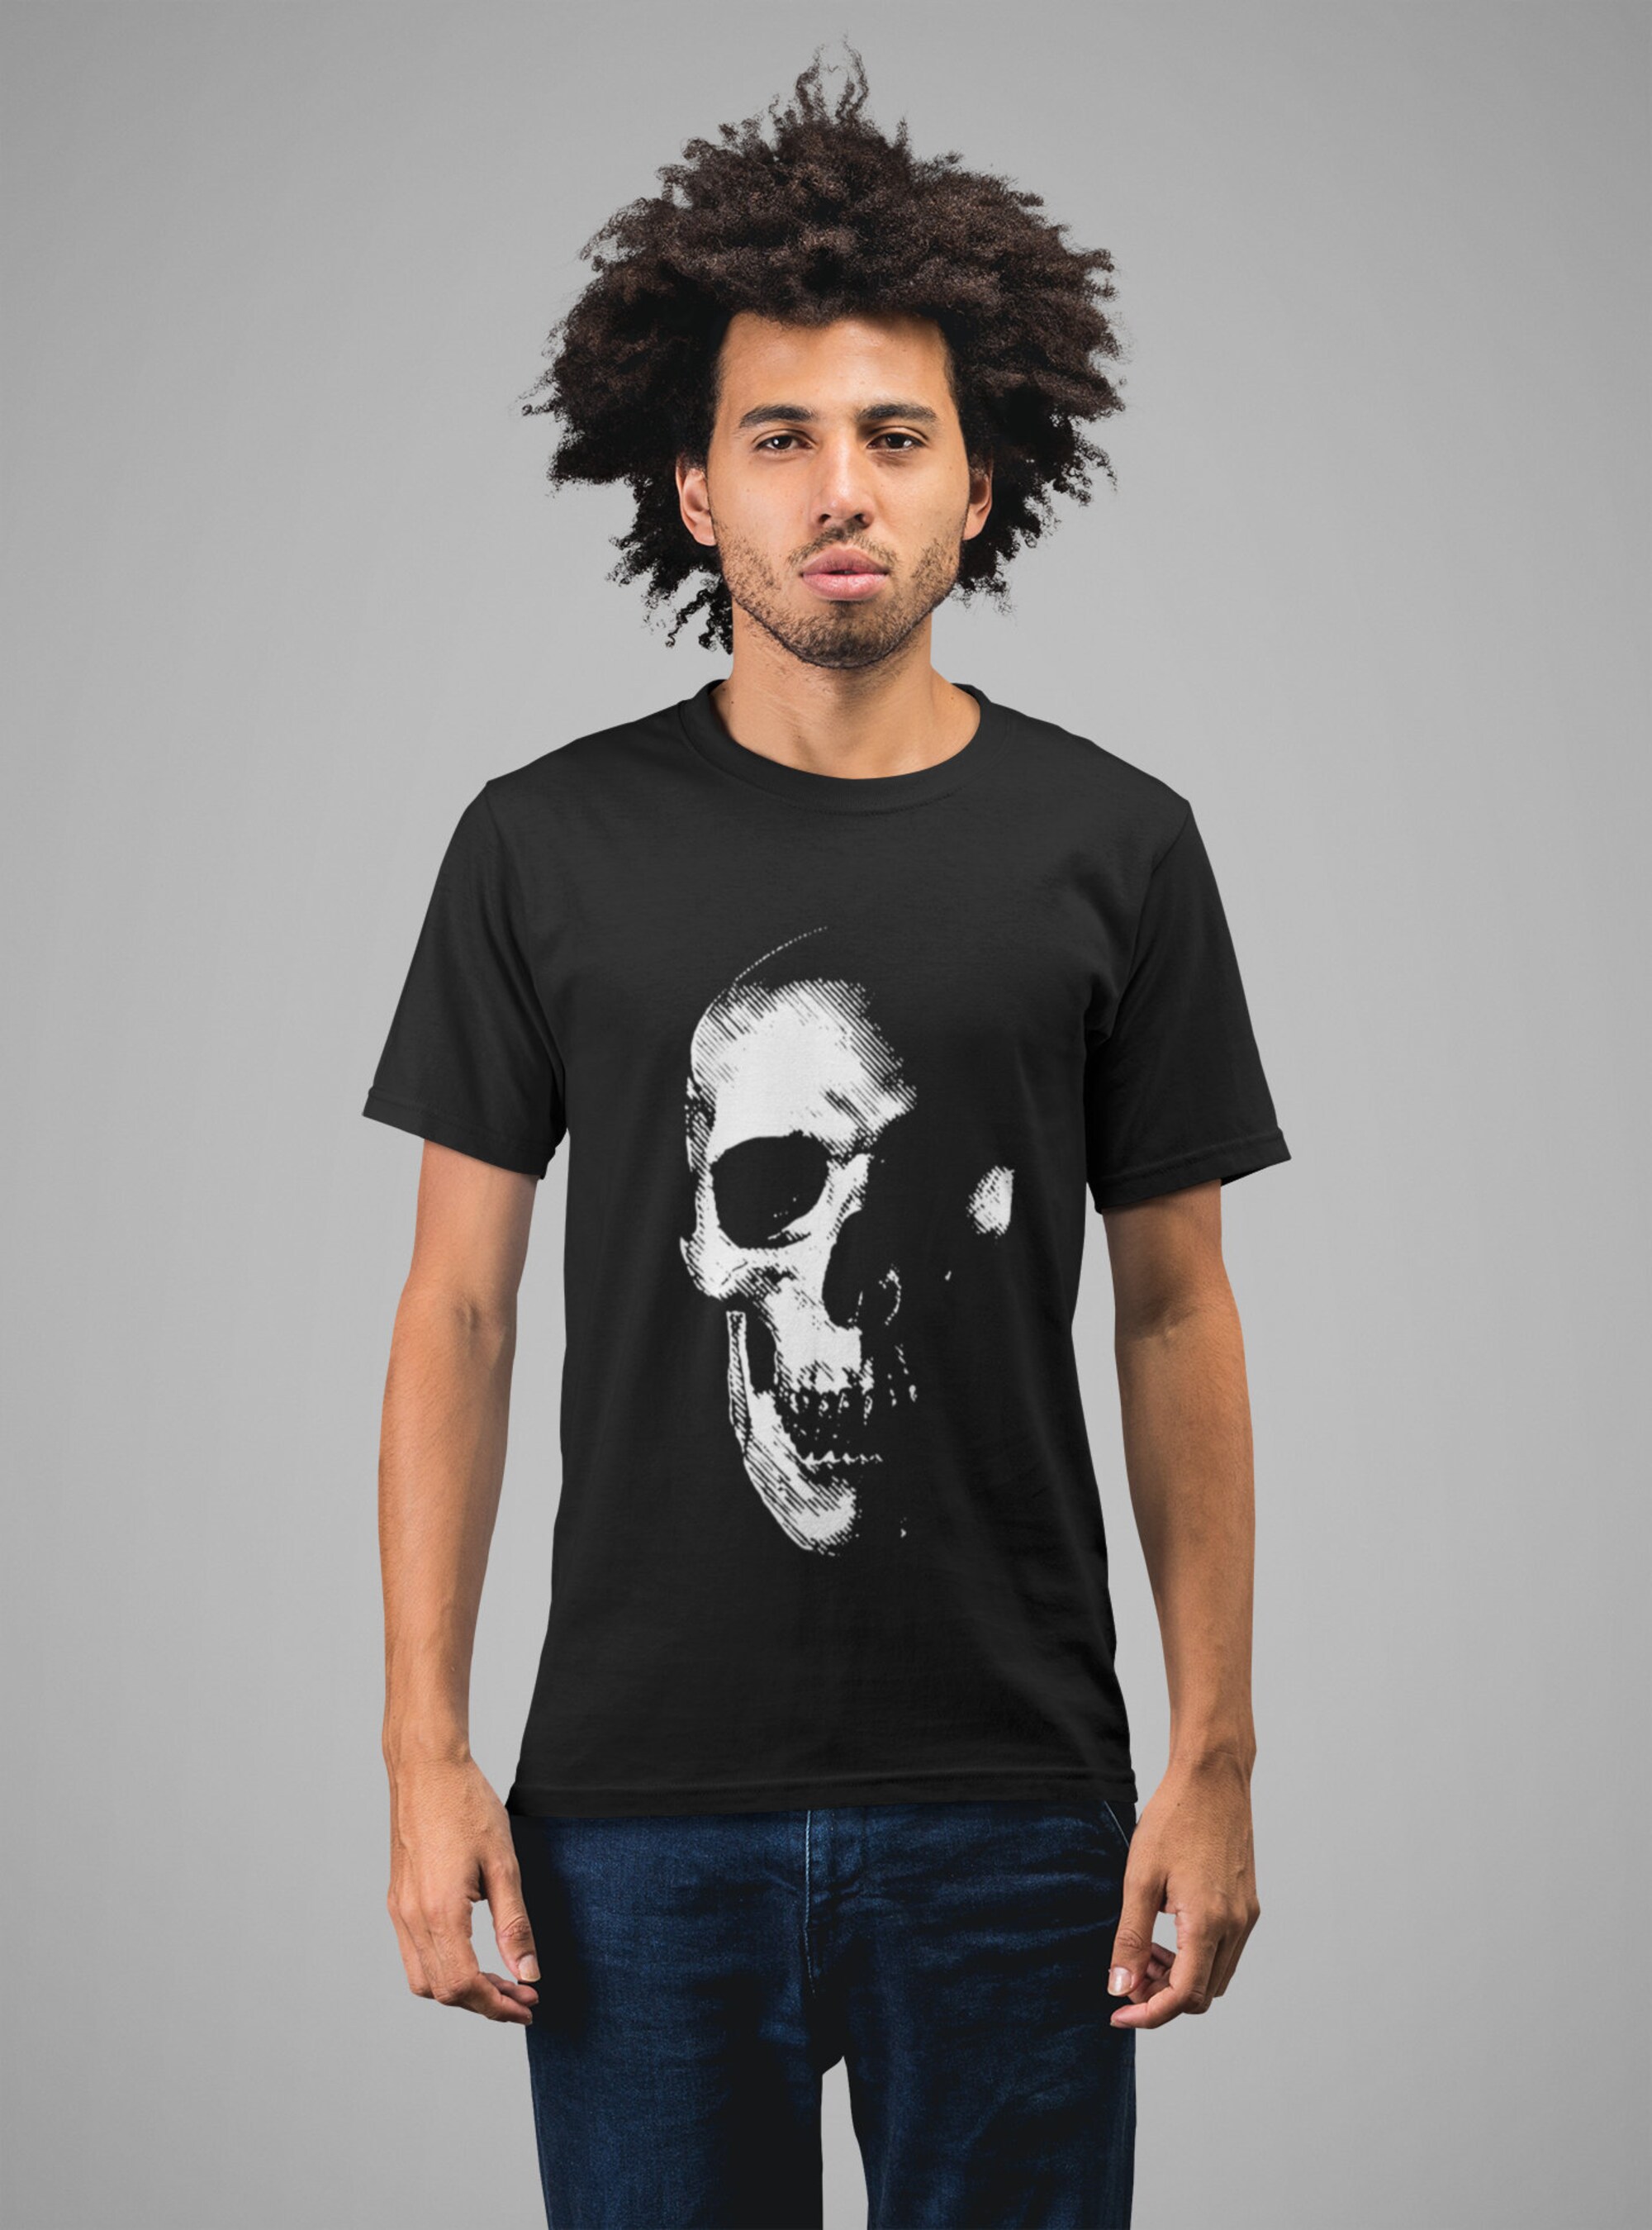 Cool Skull shirts, Memento mori, Unisex Cool Human Black White Skull t-shirt